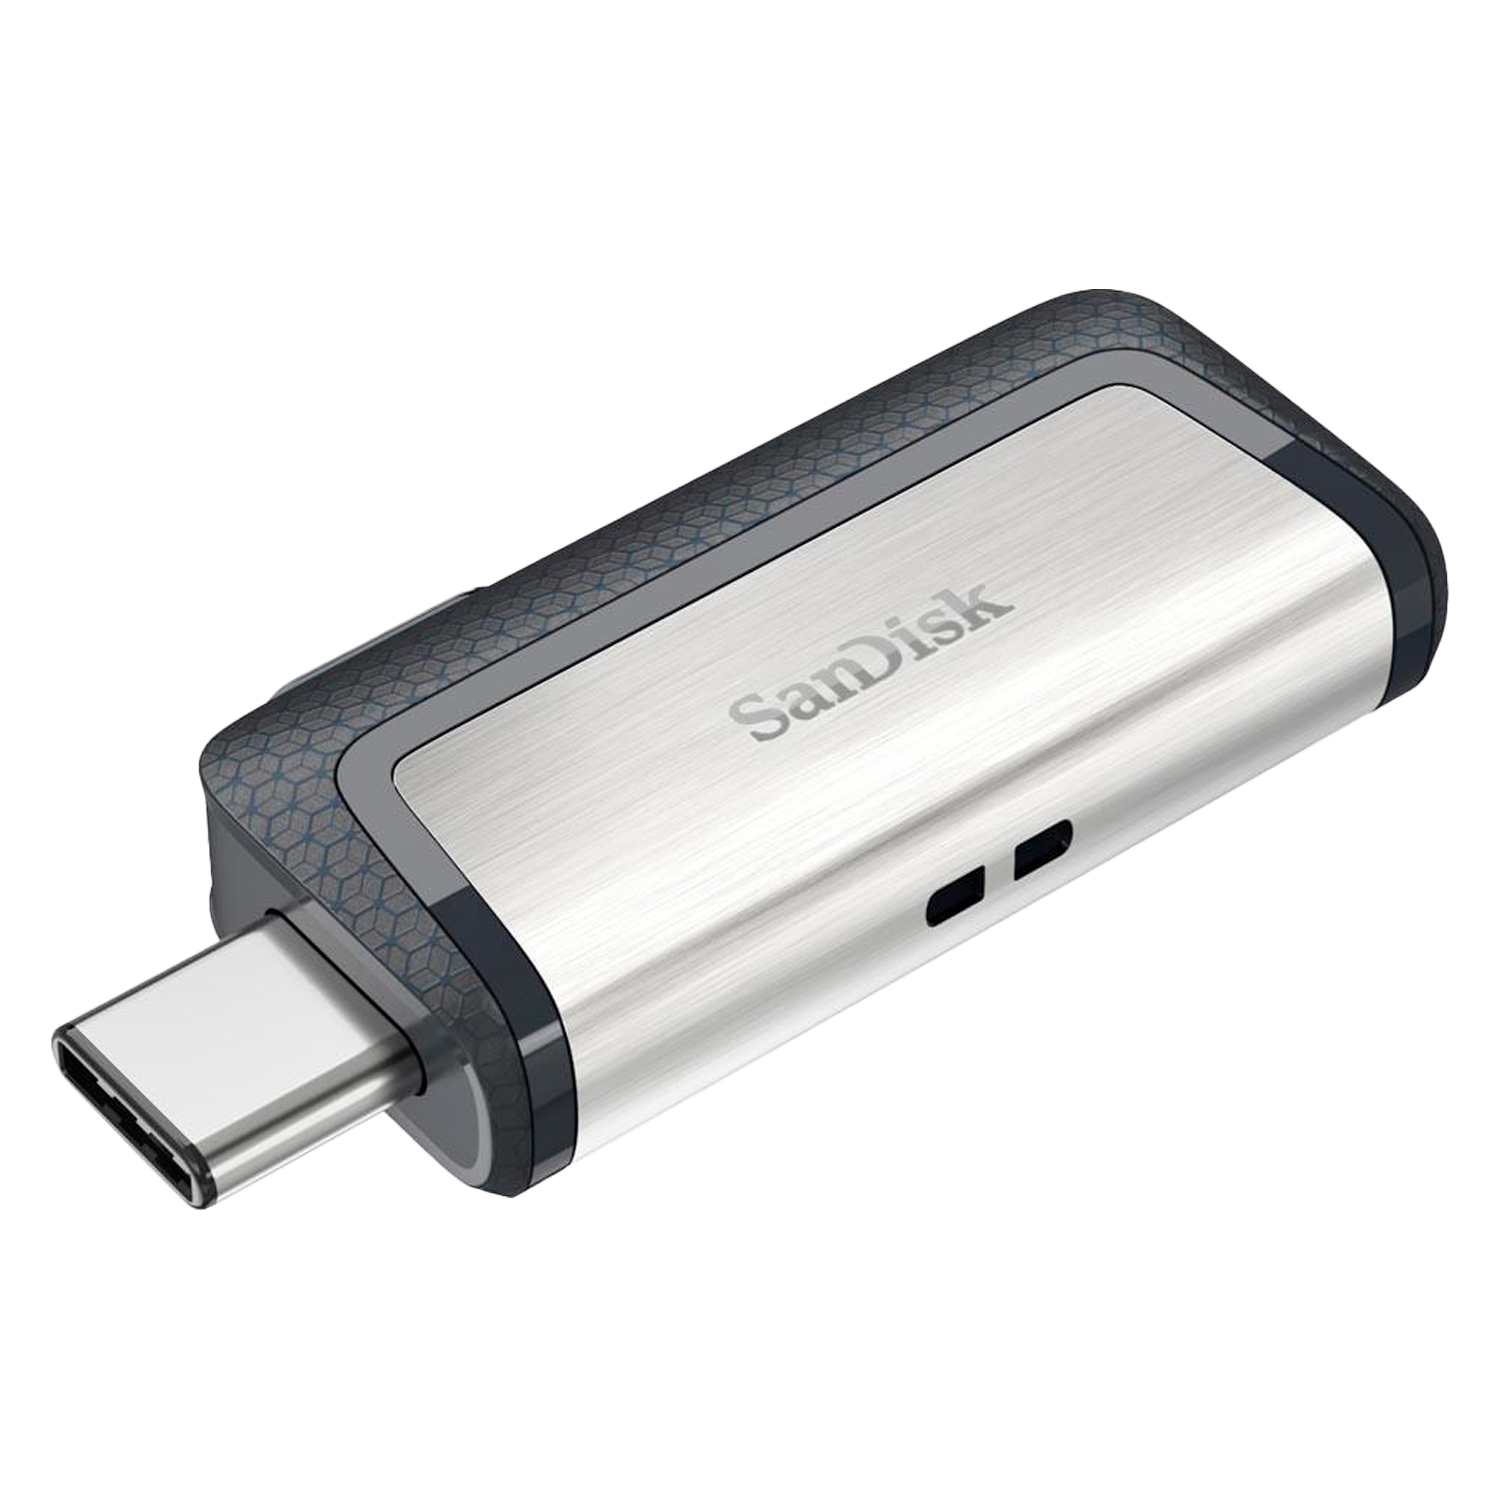 Pendrive Sandisk Ultra Dual drive 16GB / Tipo-C / USB 3.0 - Preto (SDDD2-016G-G46)	